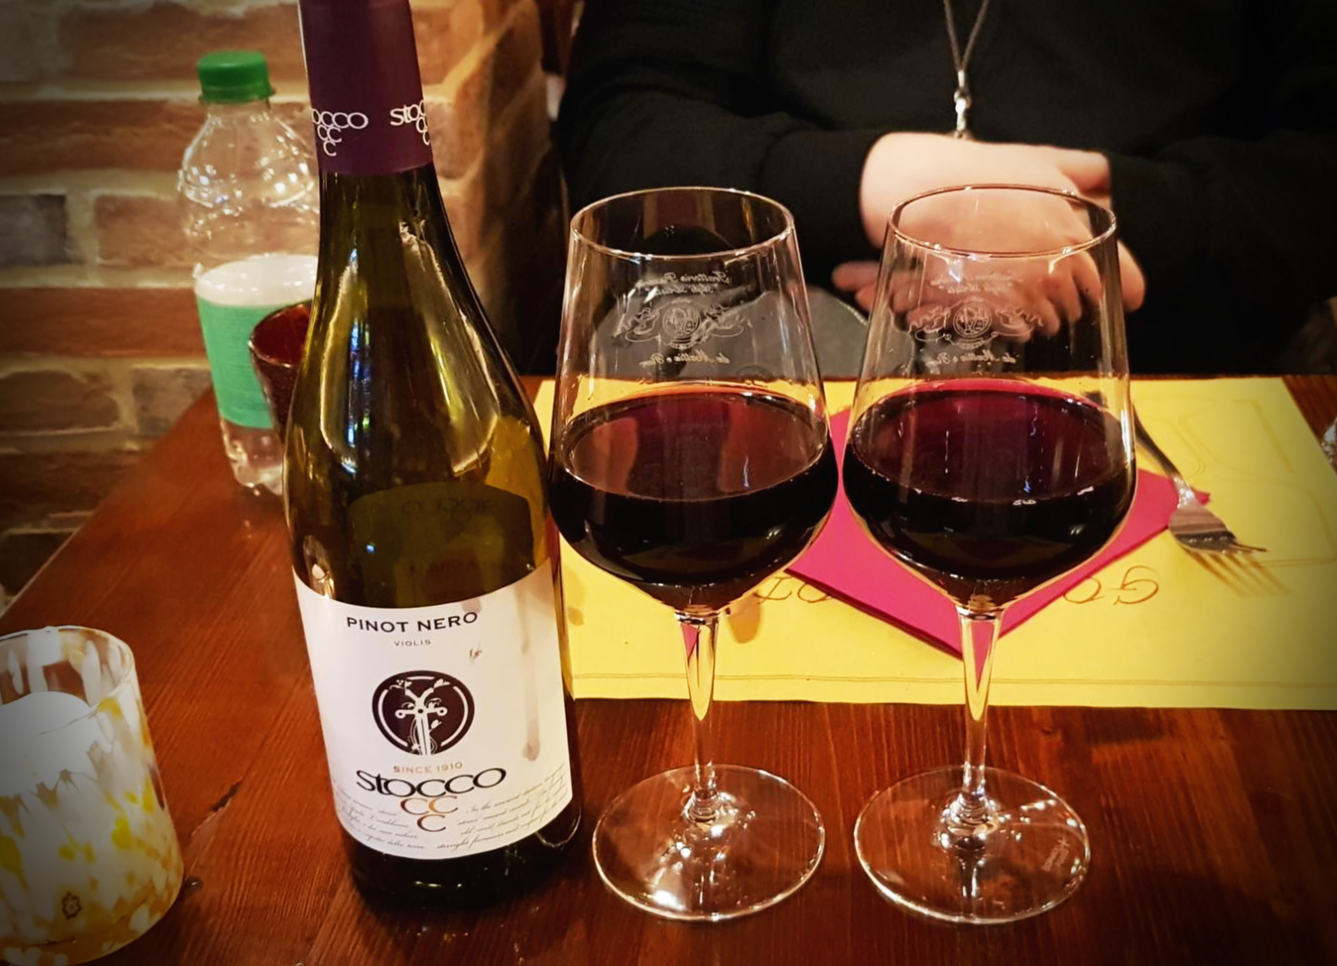 Stocco의 Pinot nero 이탈리아 와인